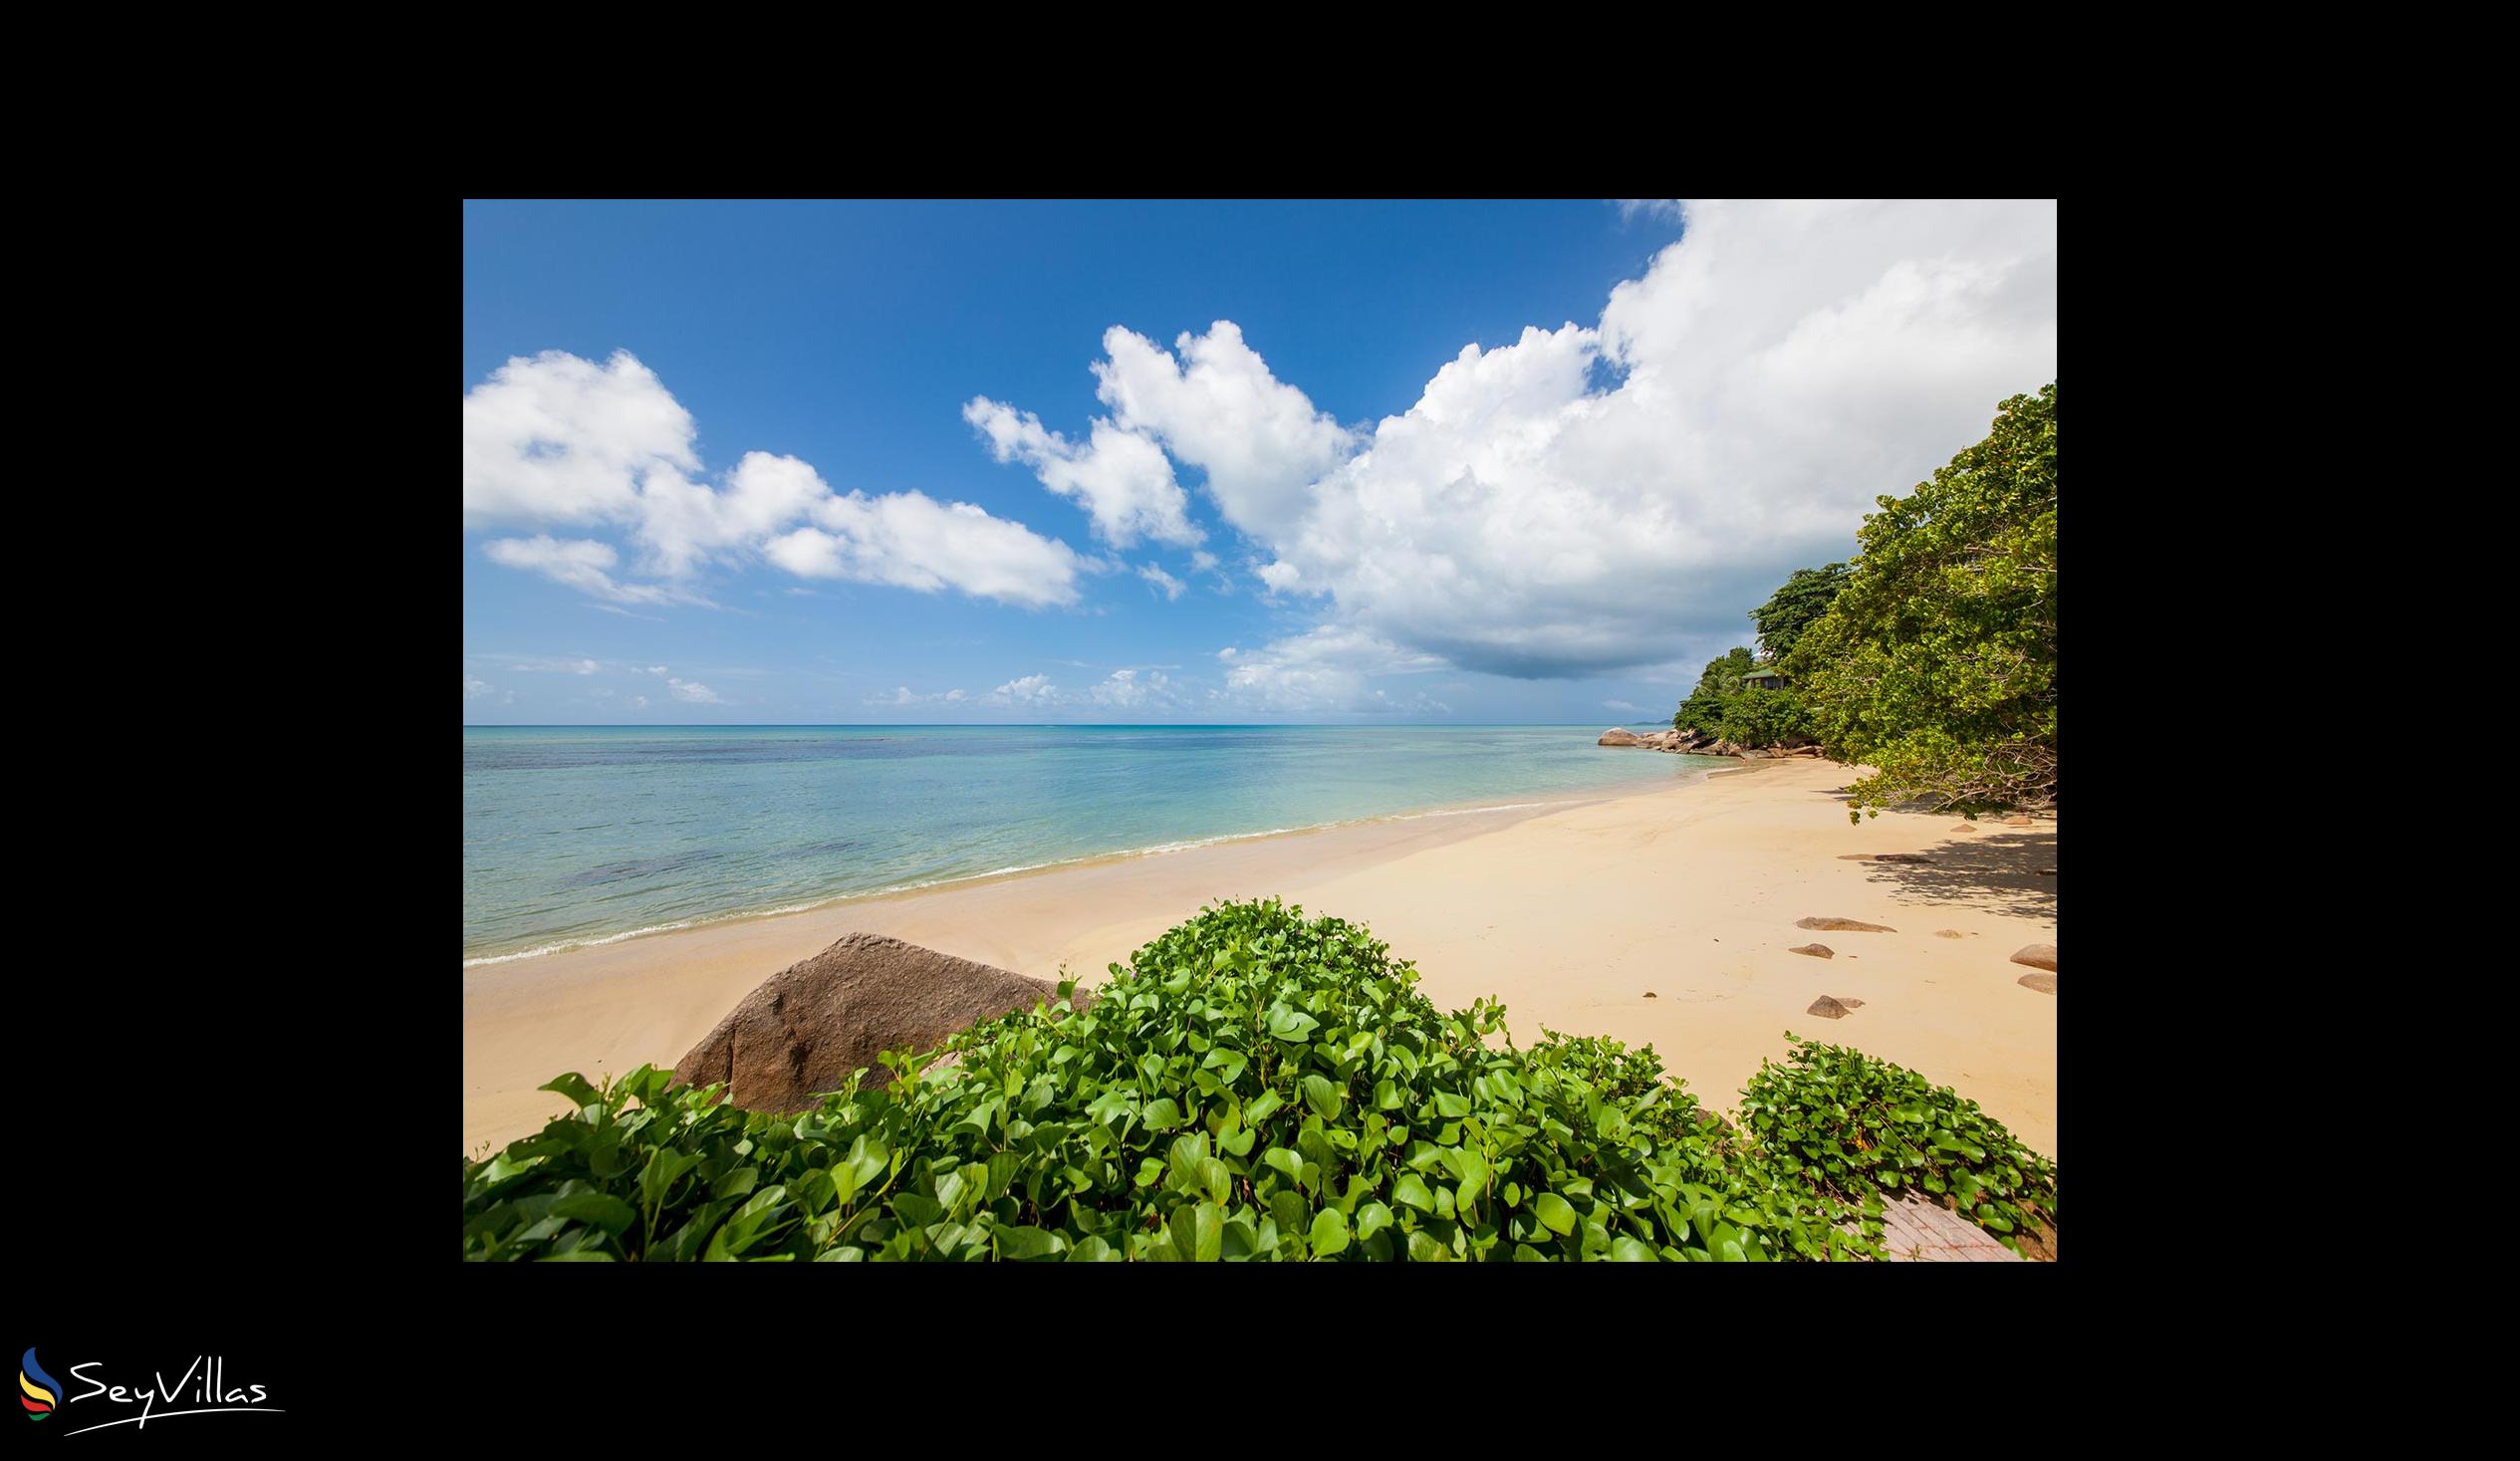 Foto 43: Coco de Mer & Black Parrot Suites - Strände - Praslin (Seychellen)